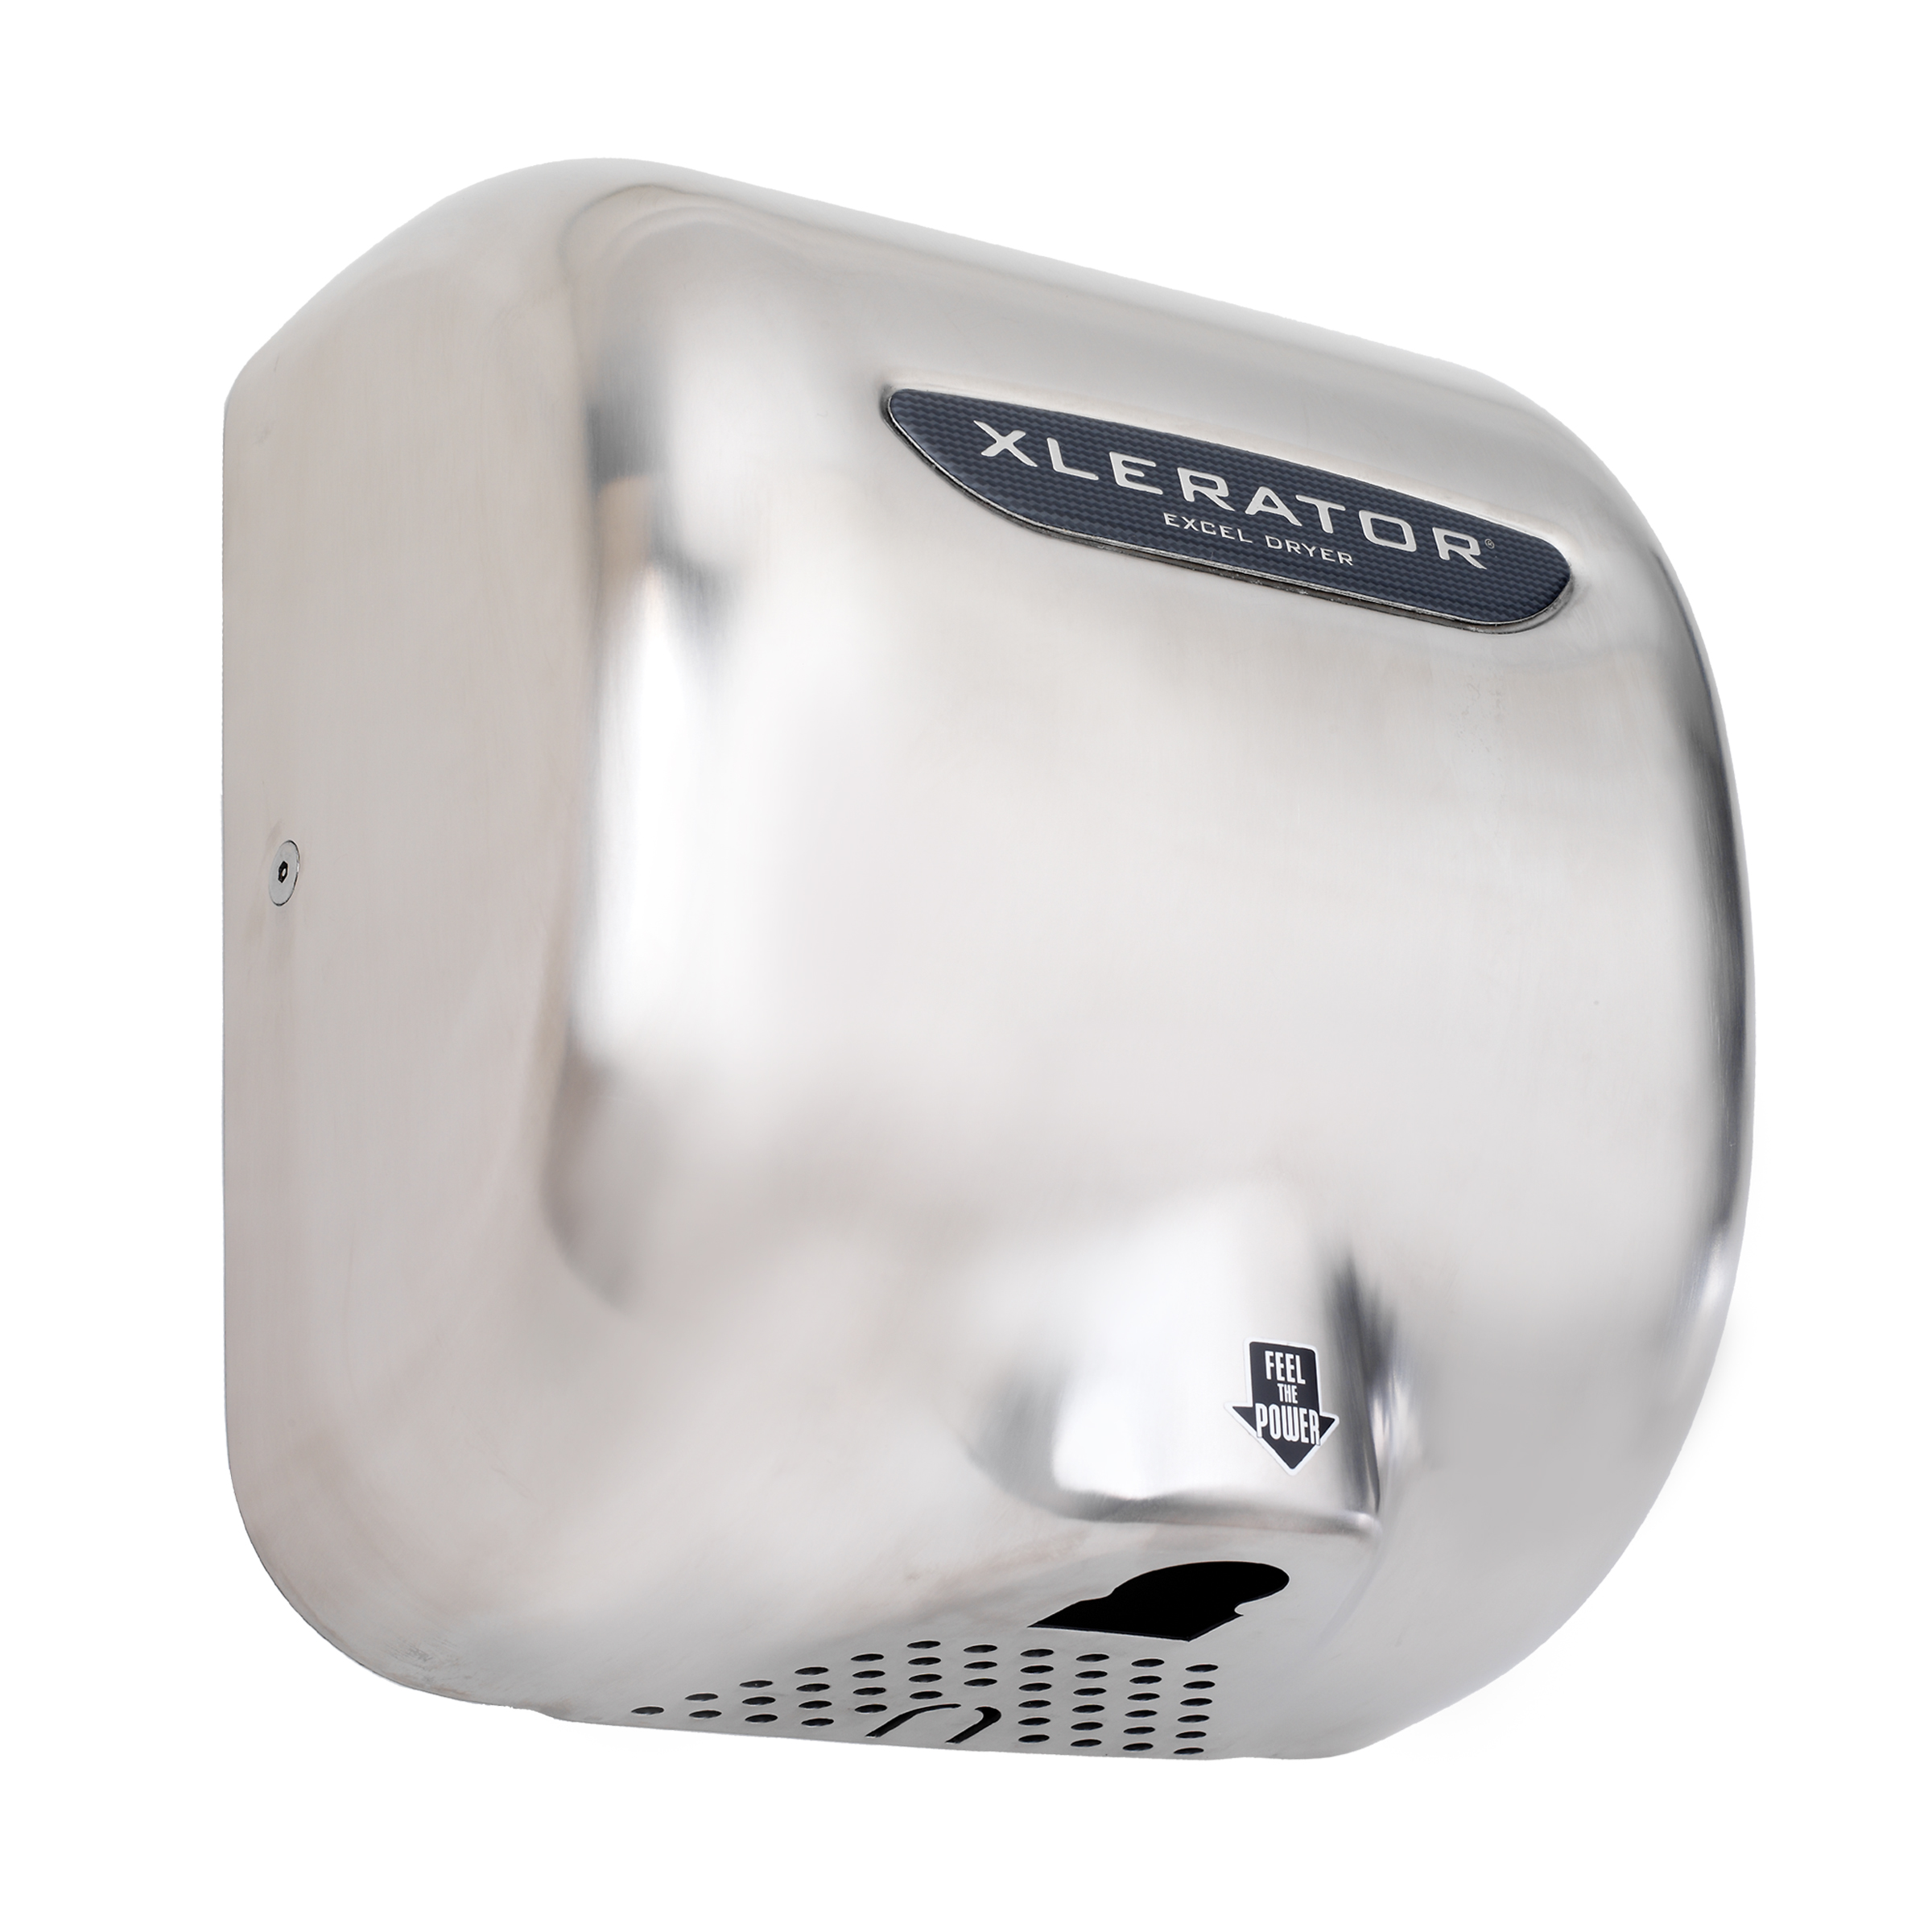 Xlerator Hand Dryer